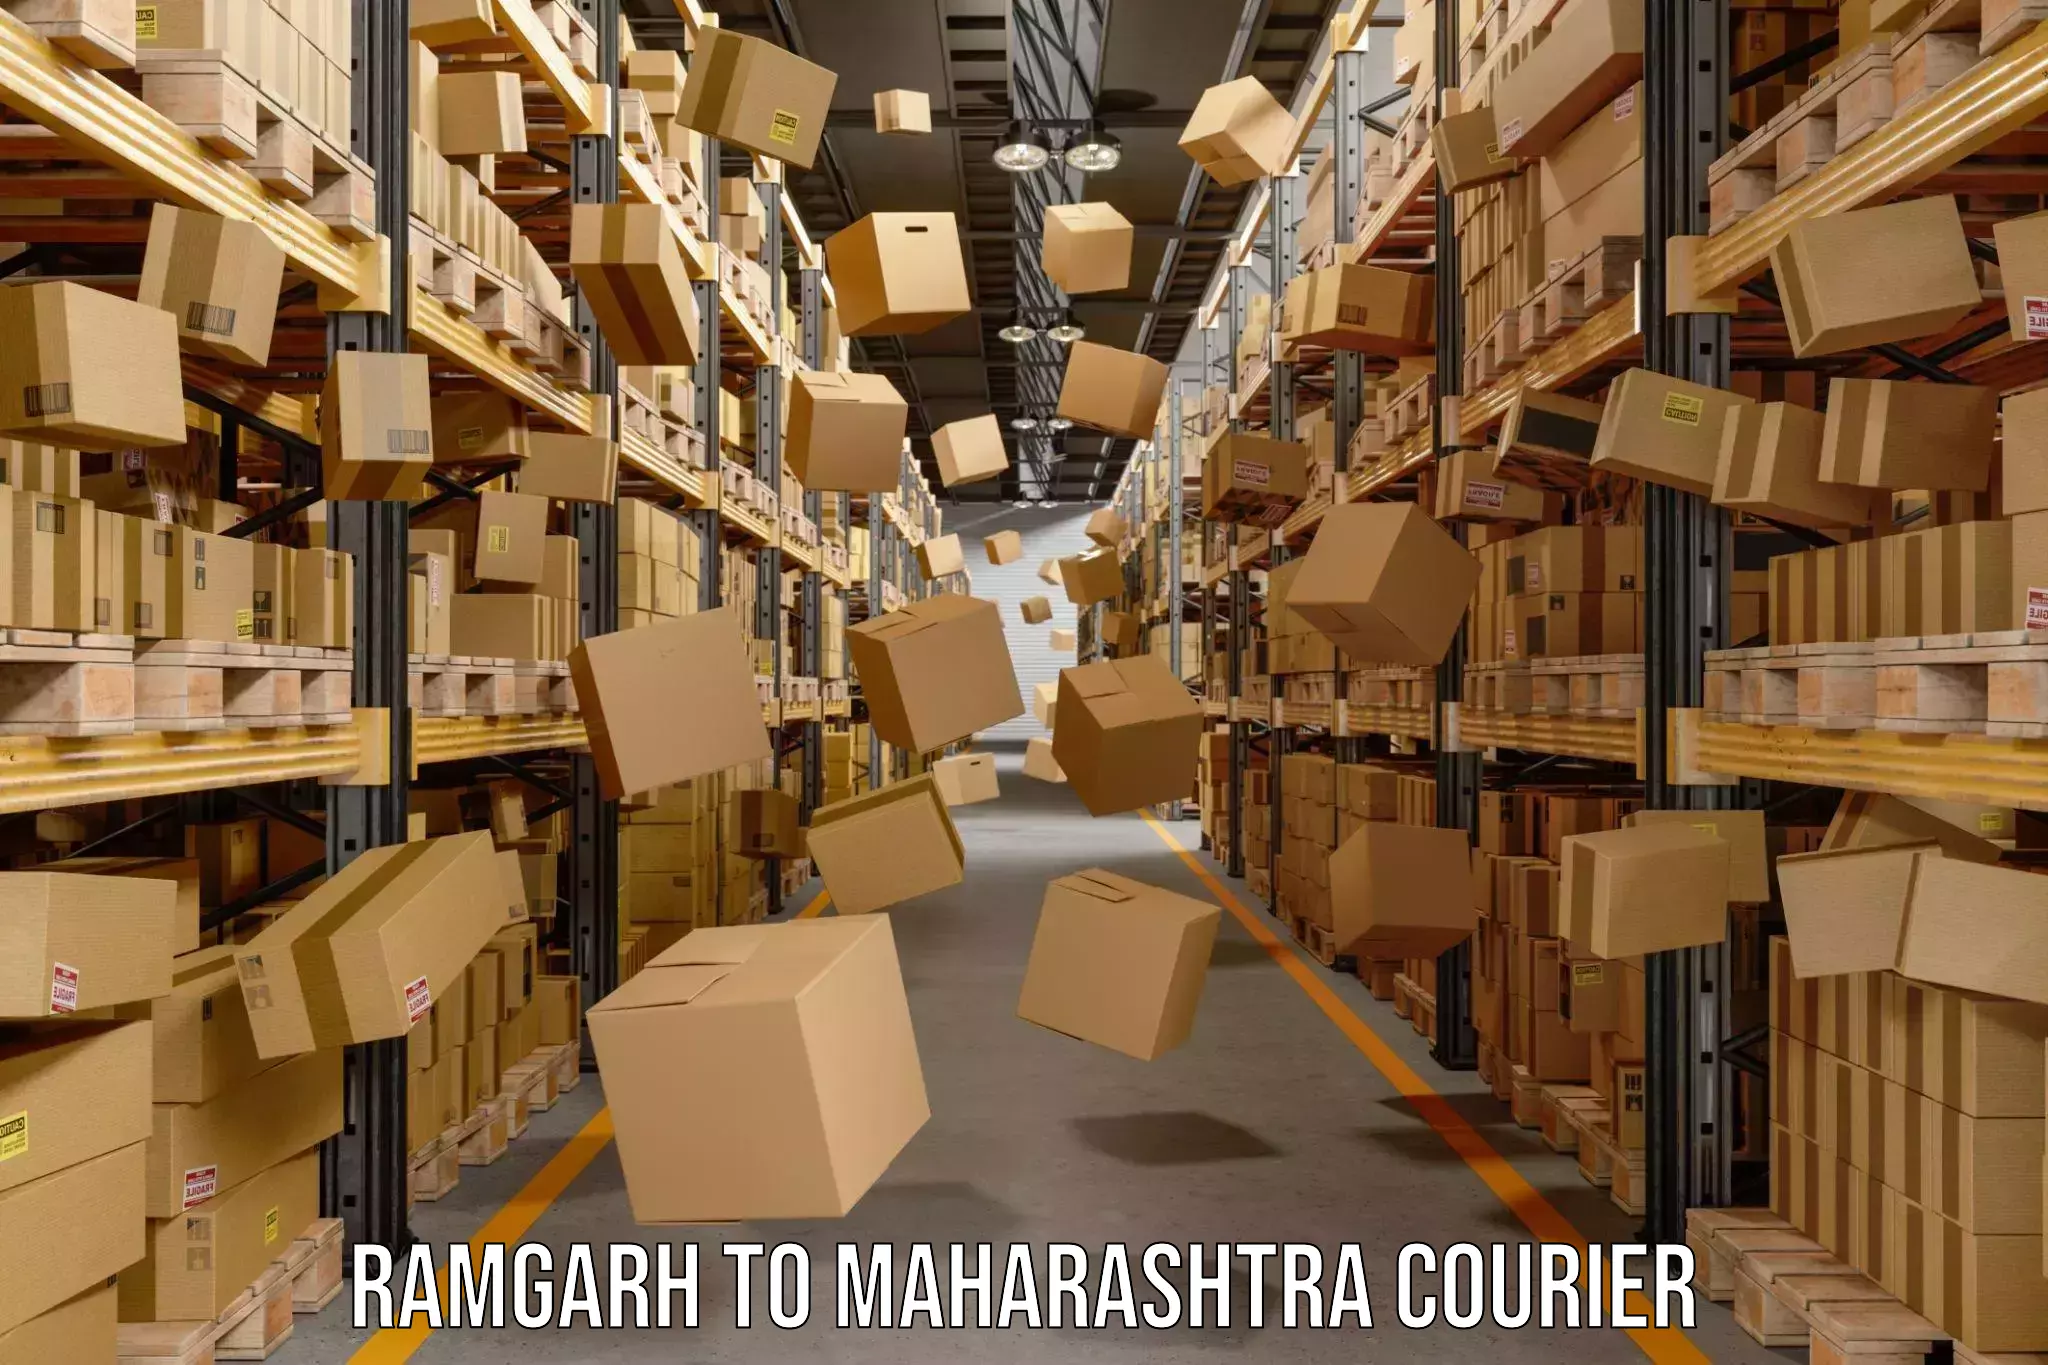 Business shipping needs Ramgarh to IIT Mumbai